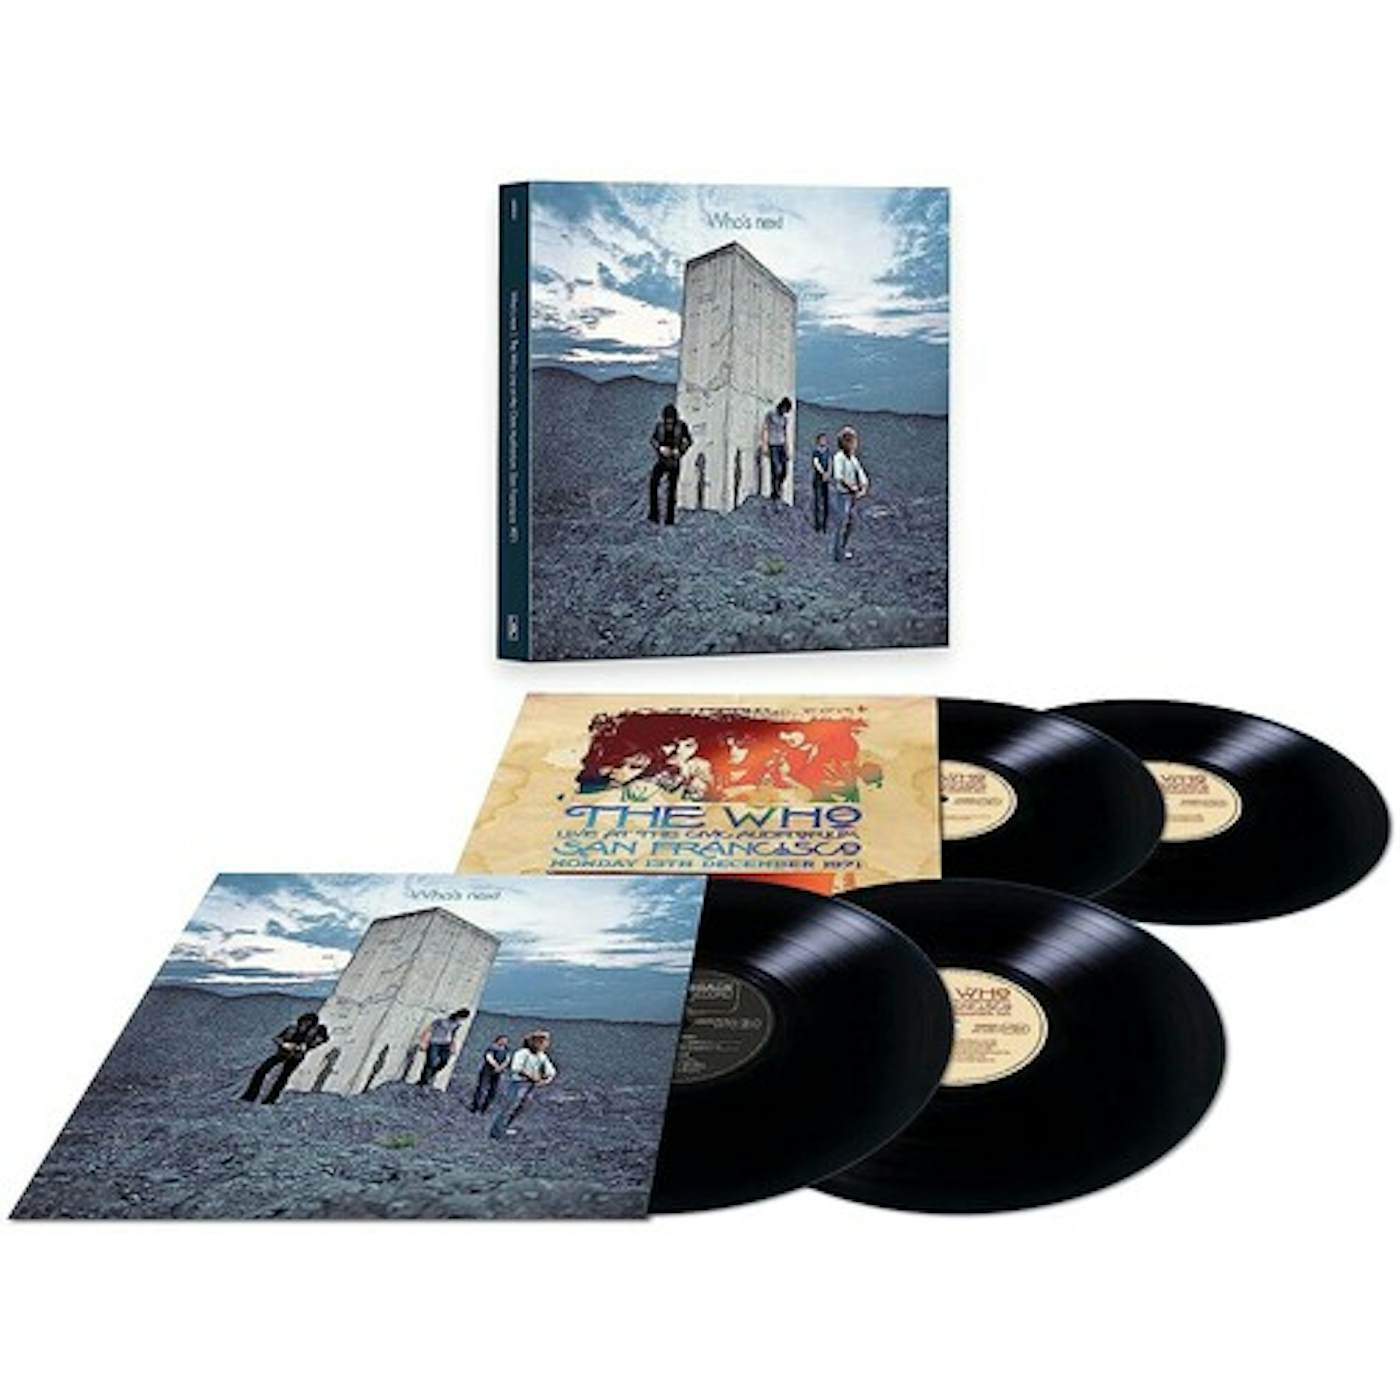 The Who'S NEXT / SAN FRANCISCO 1971 Vinyl Record